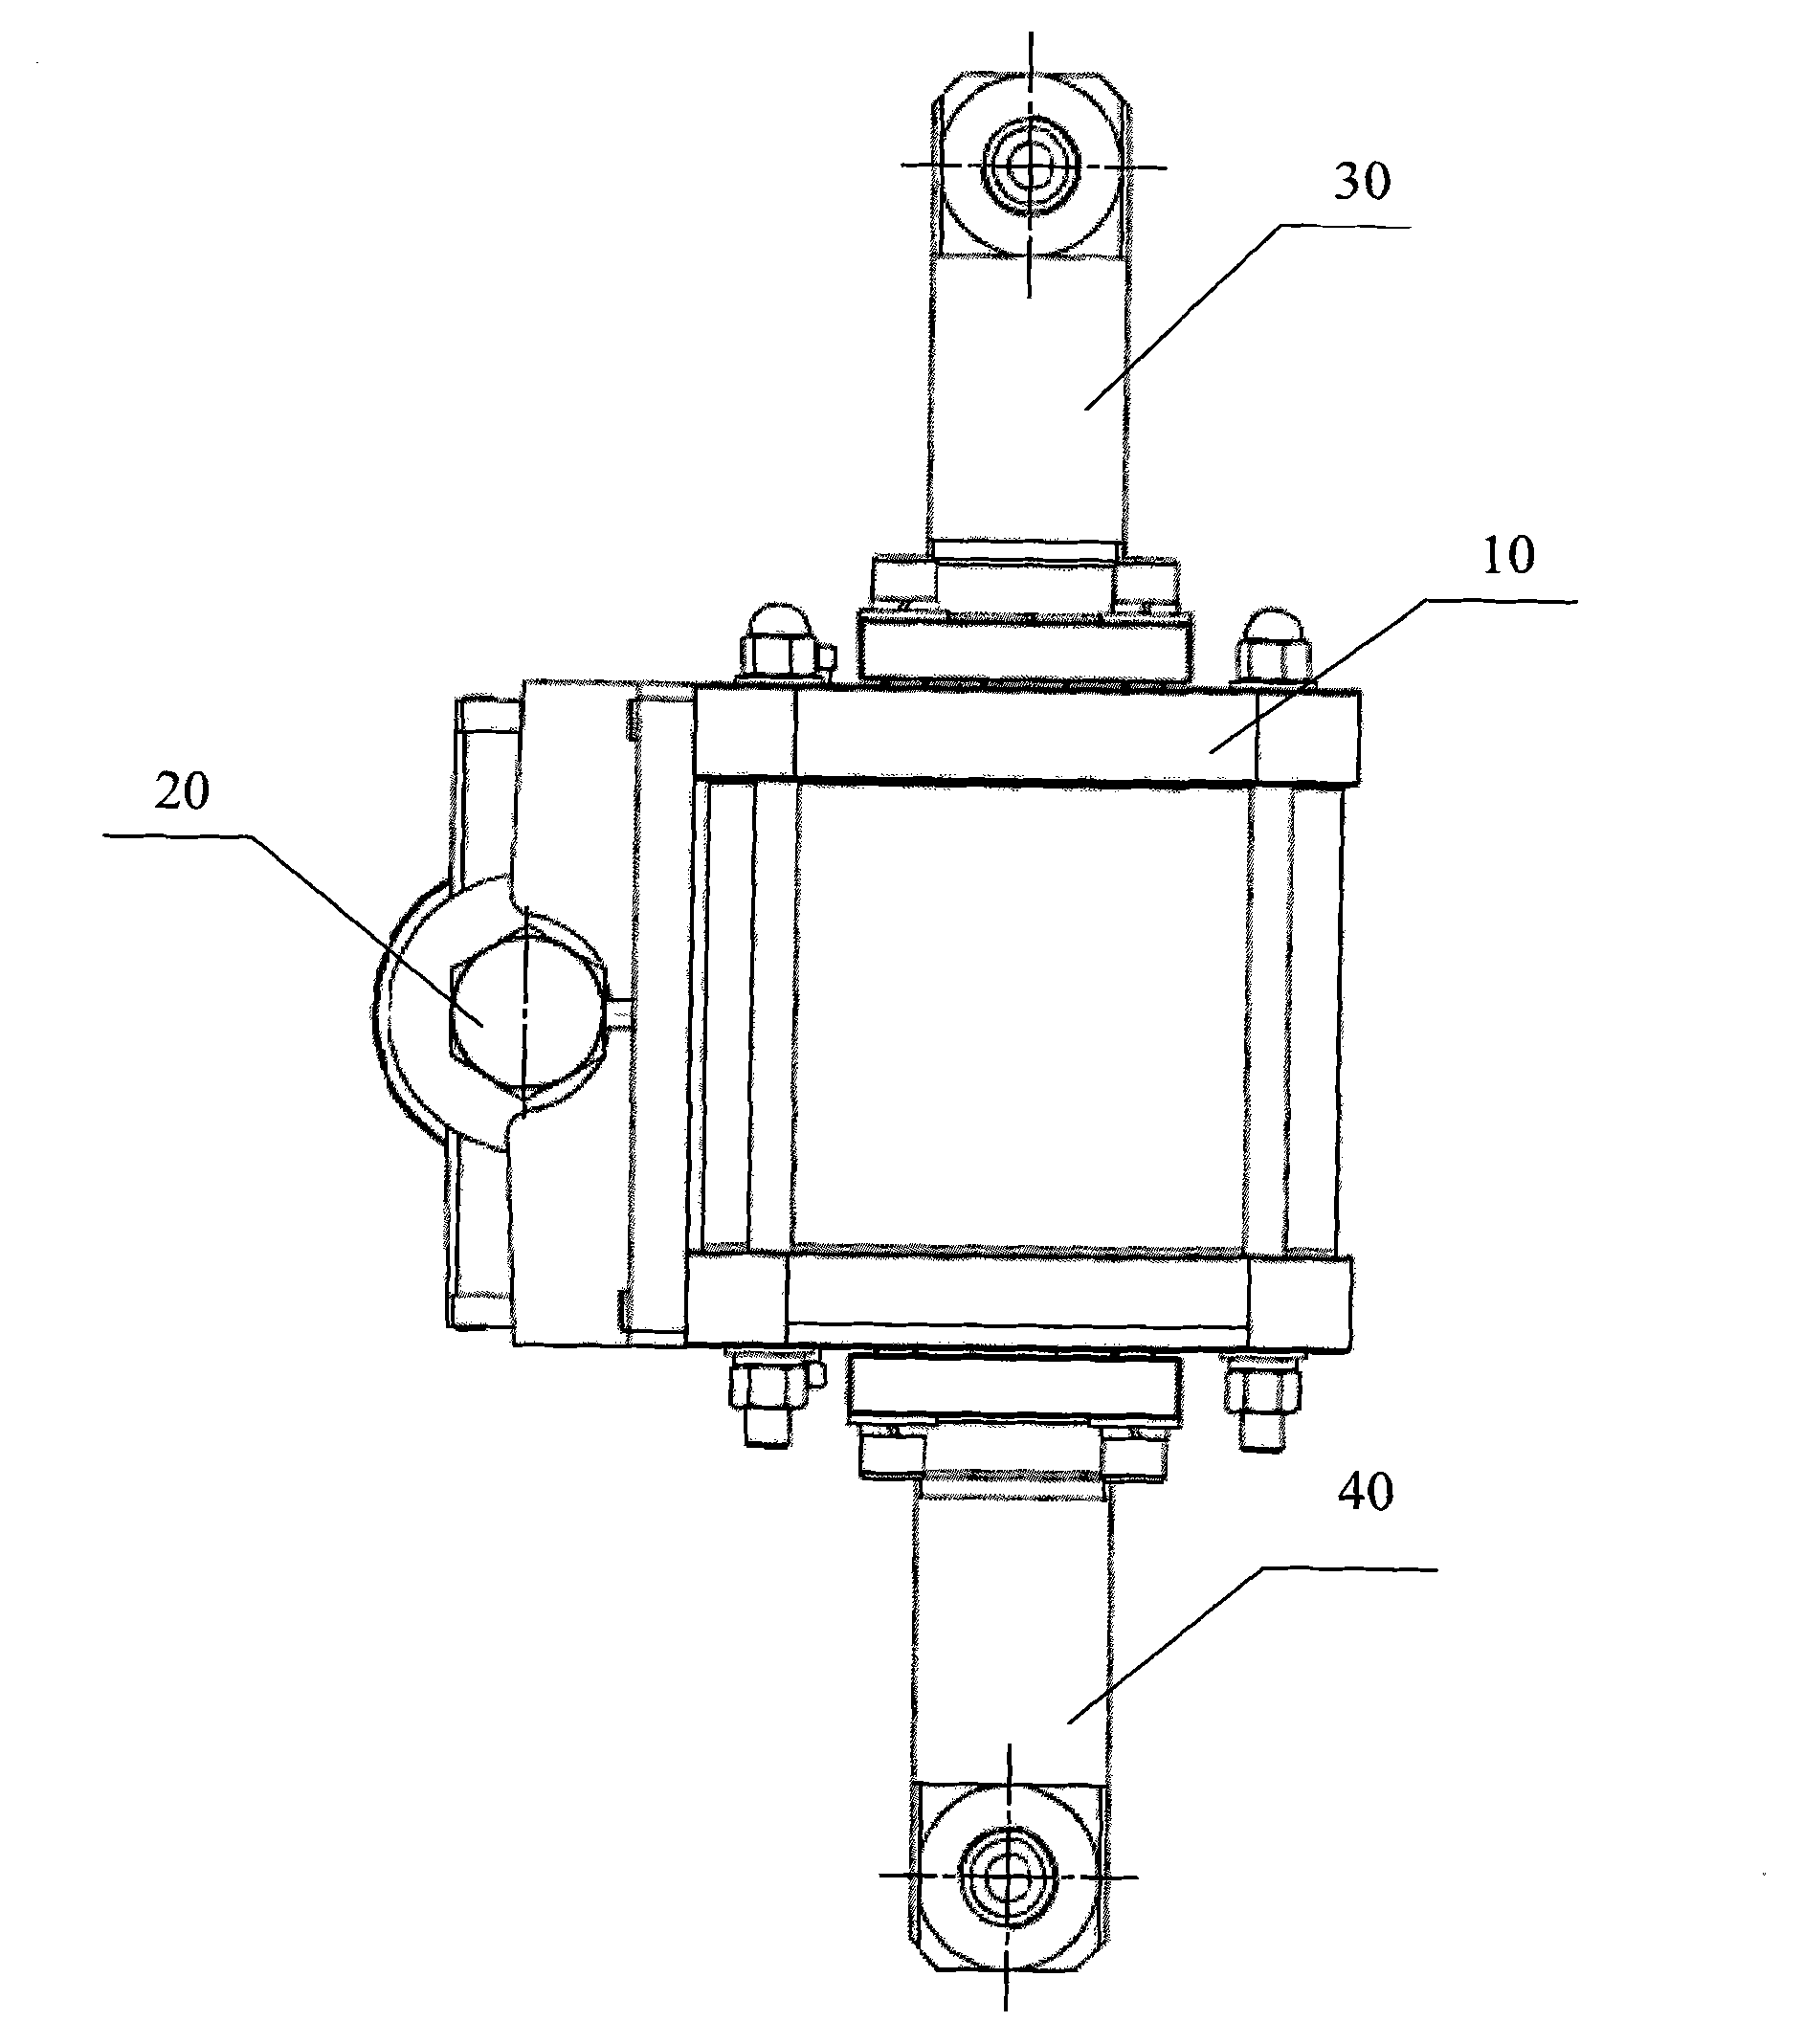 Double-acting piston pneumatic pump